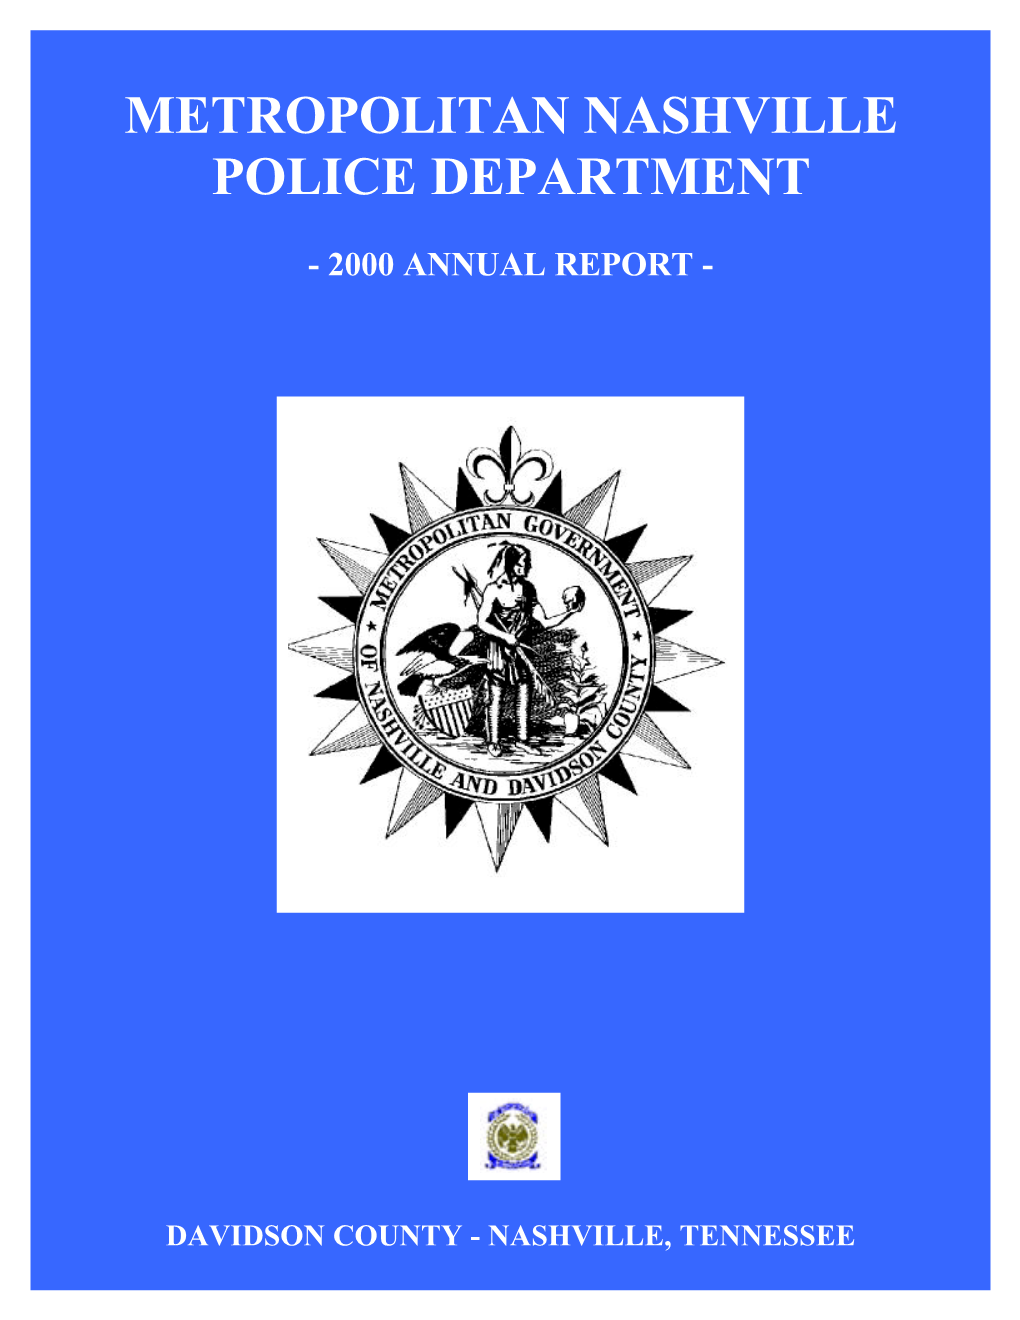 Metropolitan Nashville Police Department Annual Report 2000